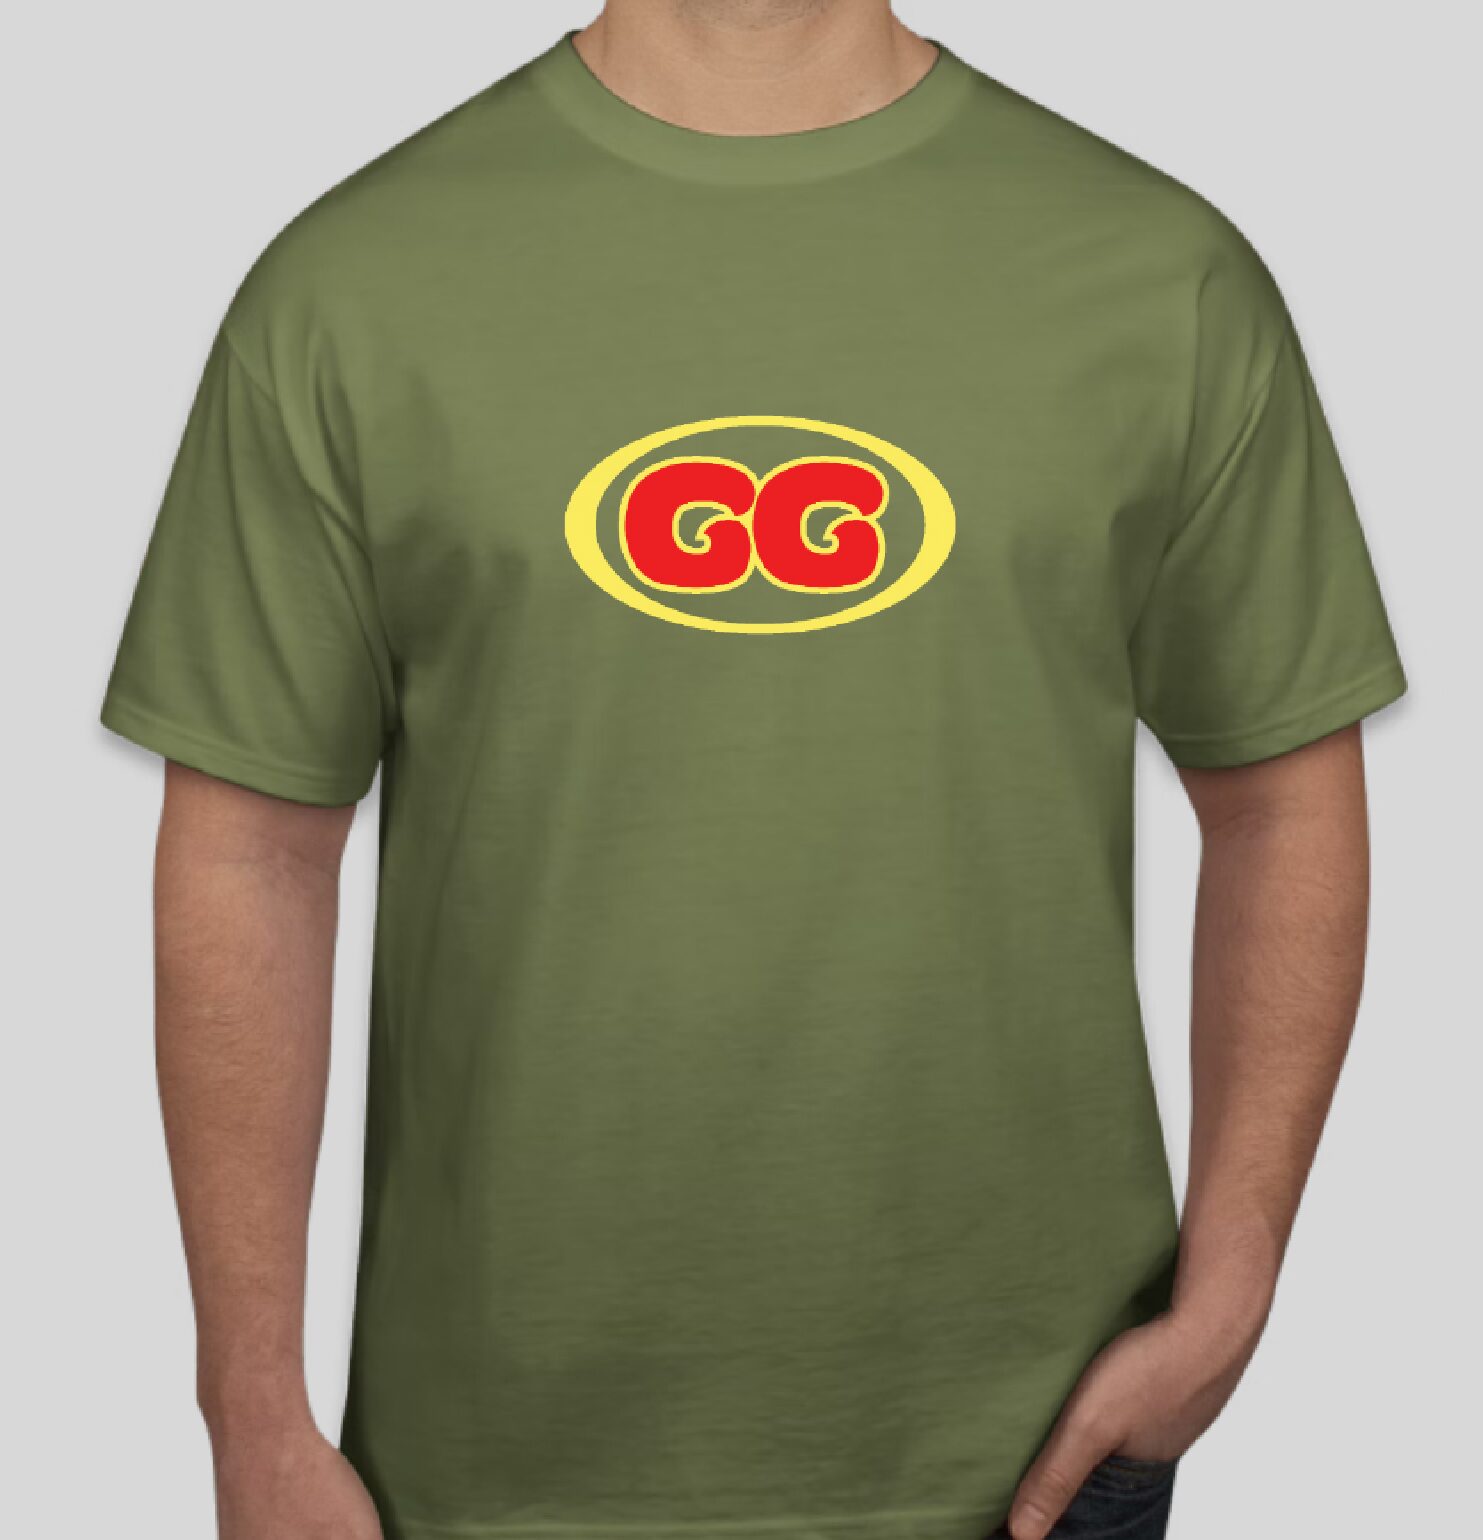 GaiGan T-Shirt Olive Printed on Champion